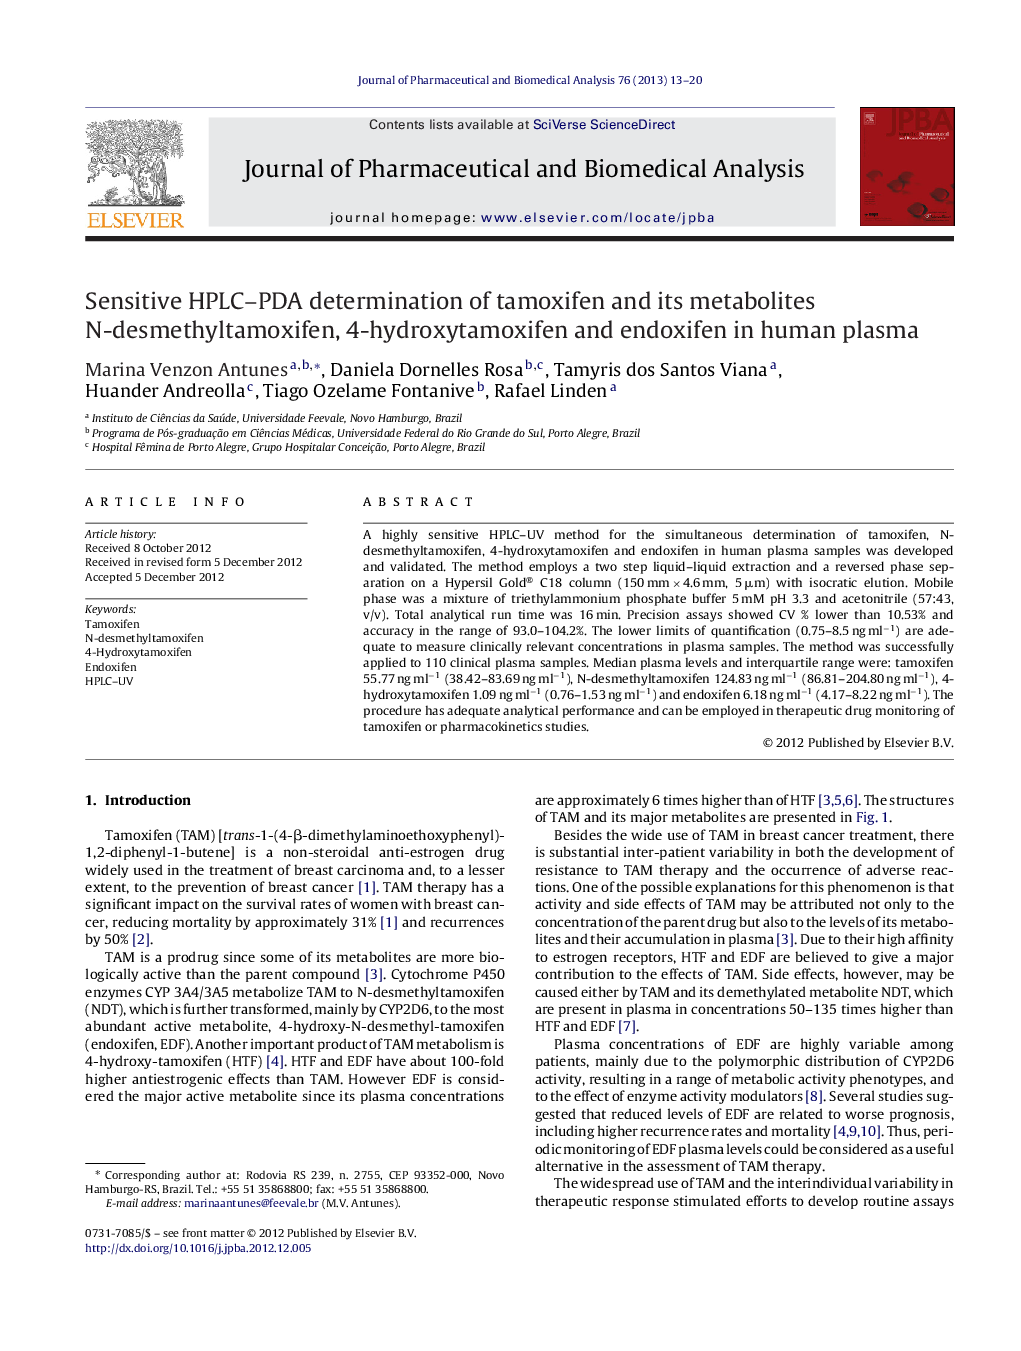 Sensitive HPLC-PDA determination of tamoxifen and its metabolites N-desmethyltamoxifen, 4-hydroxytamoxifen and endoxifen in human plasma